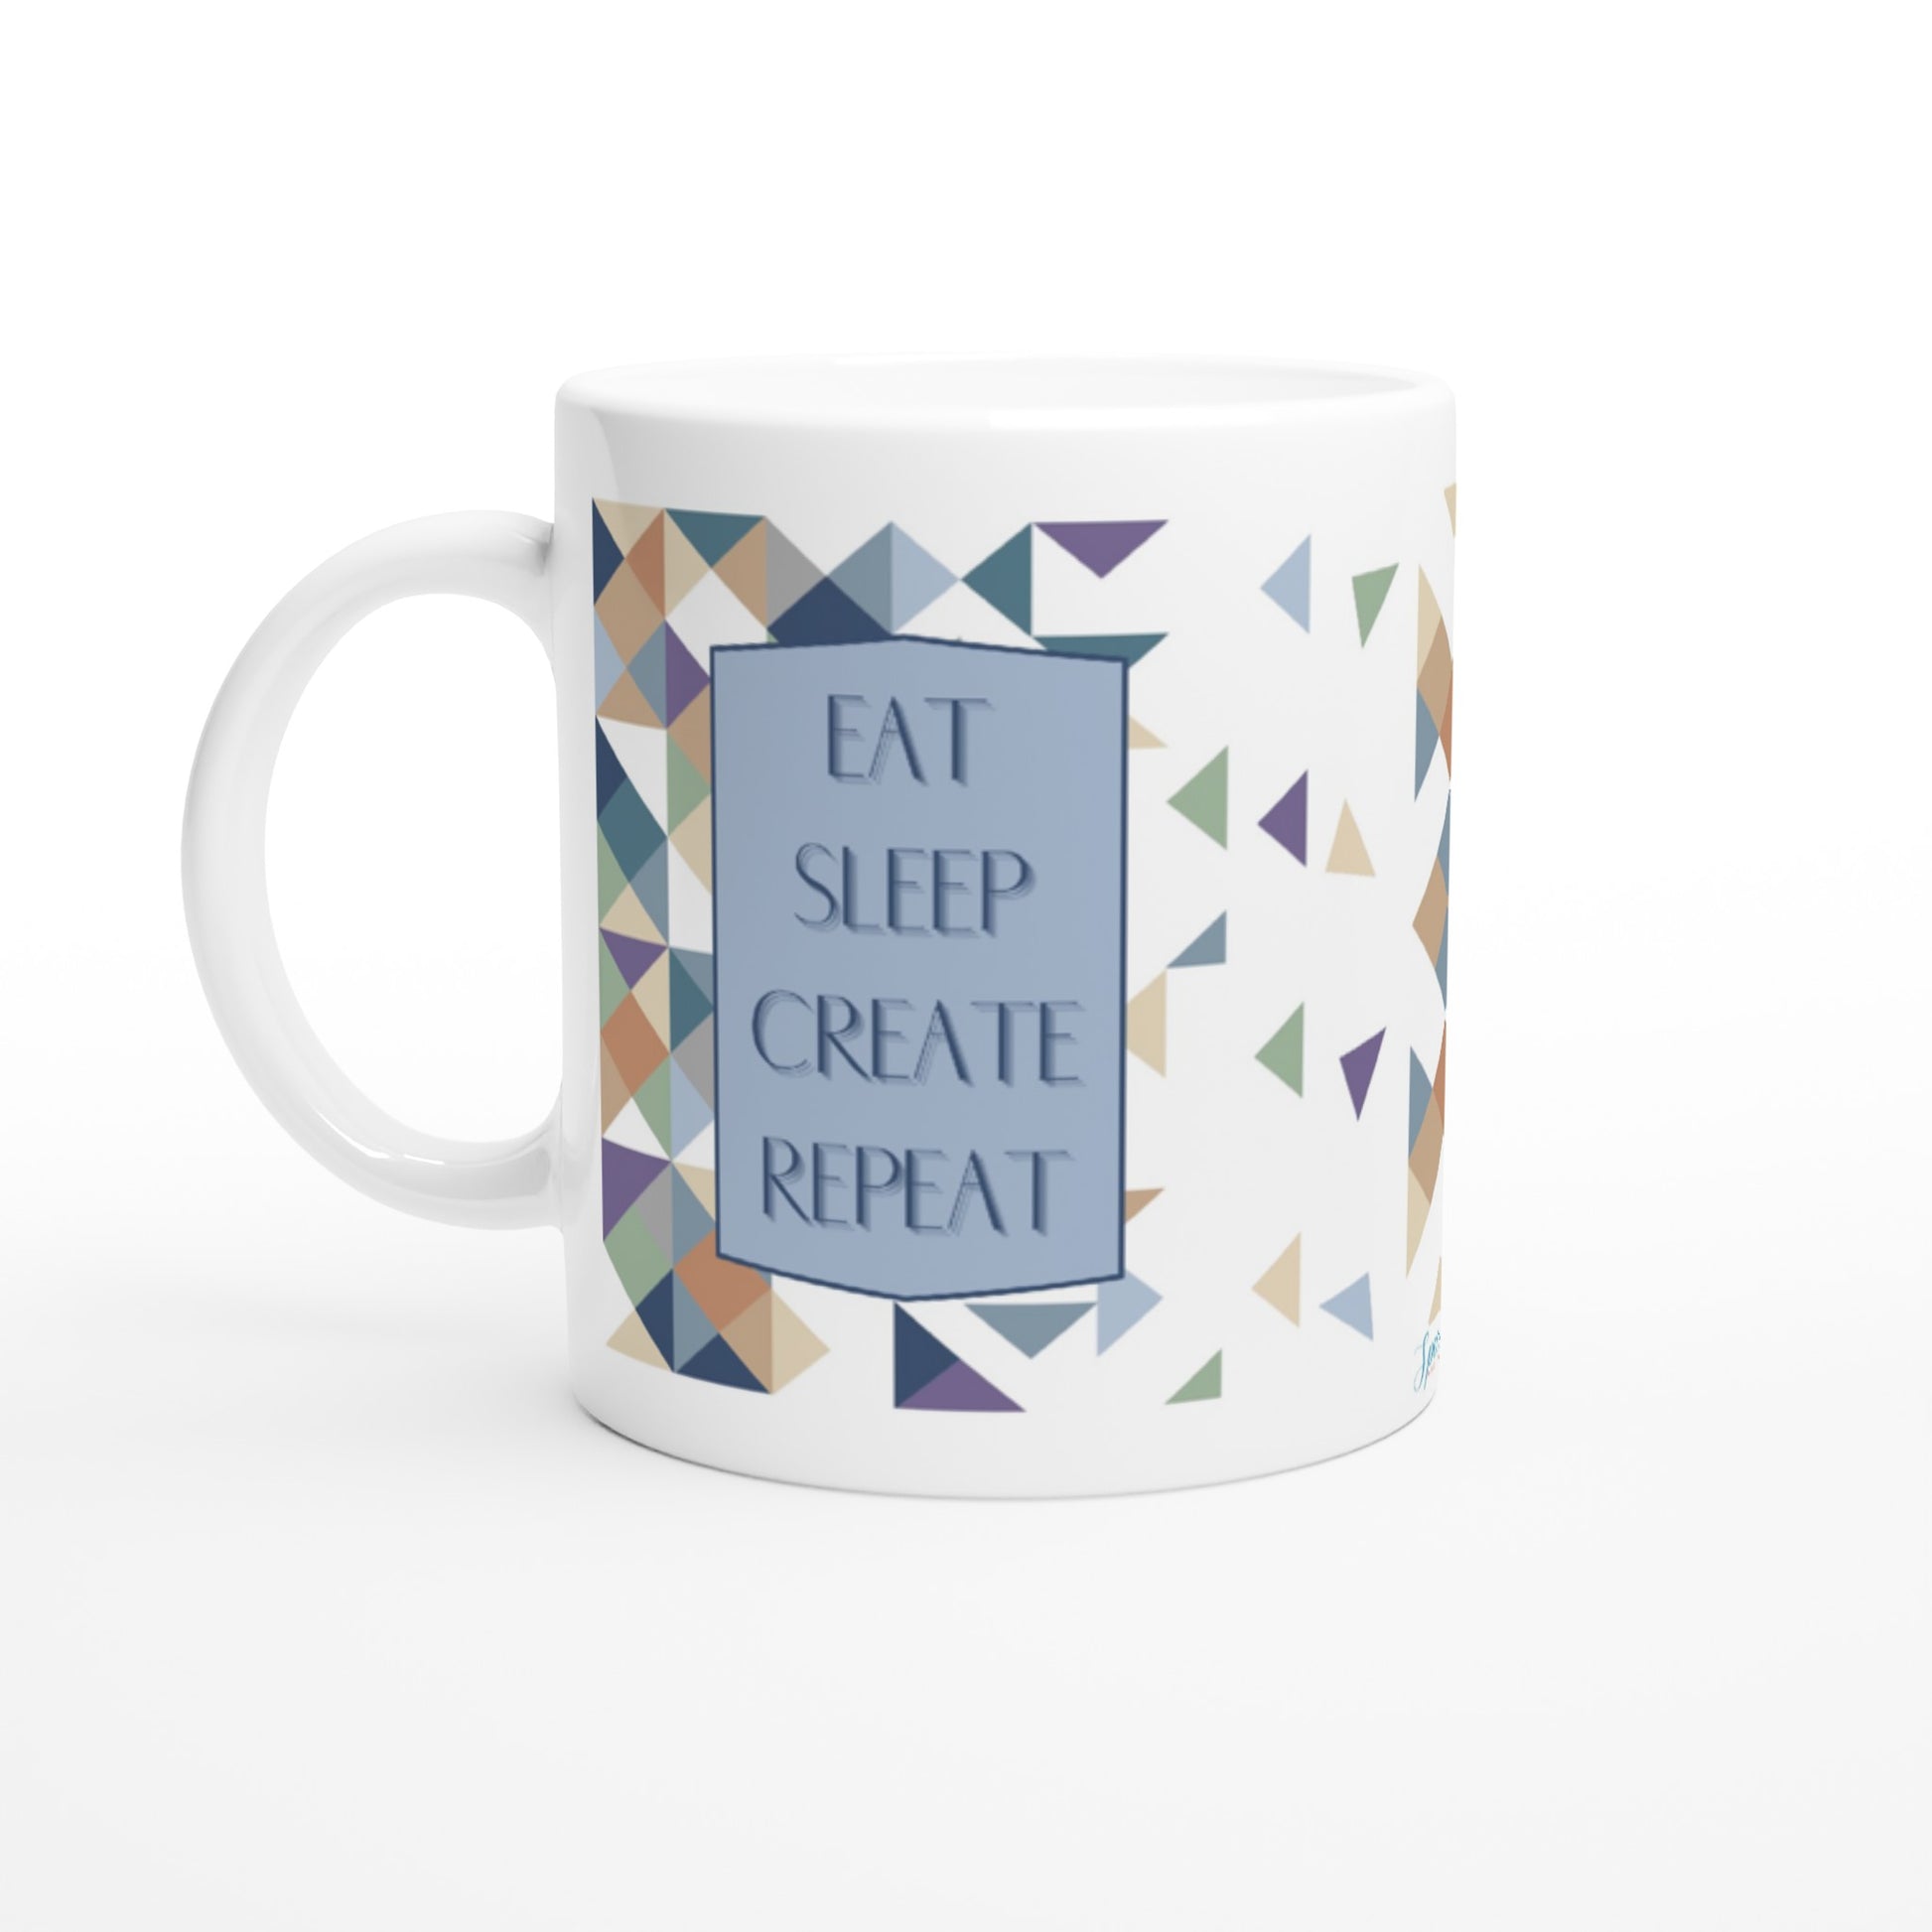 "Eat Sleep Create Repeat" 11 oz. Mug front view